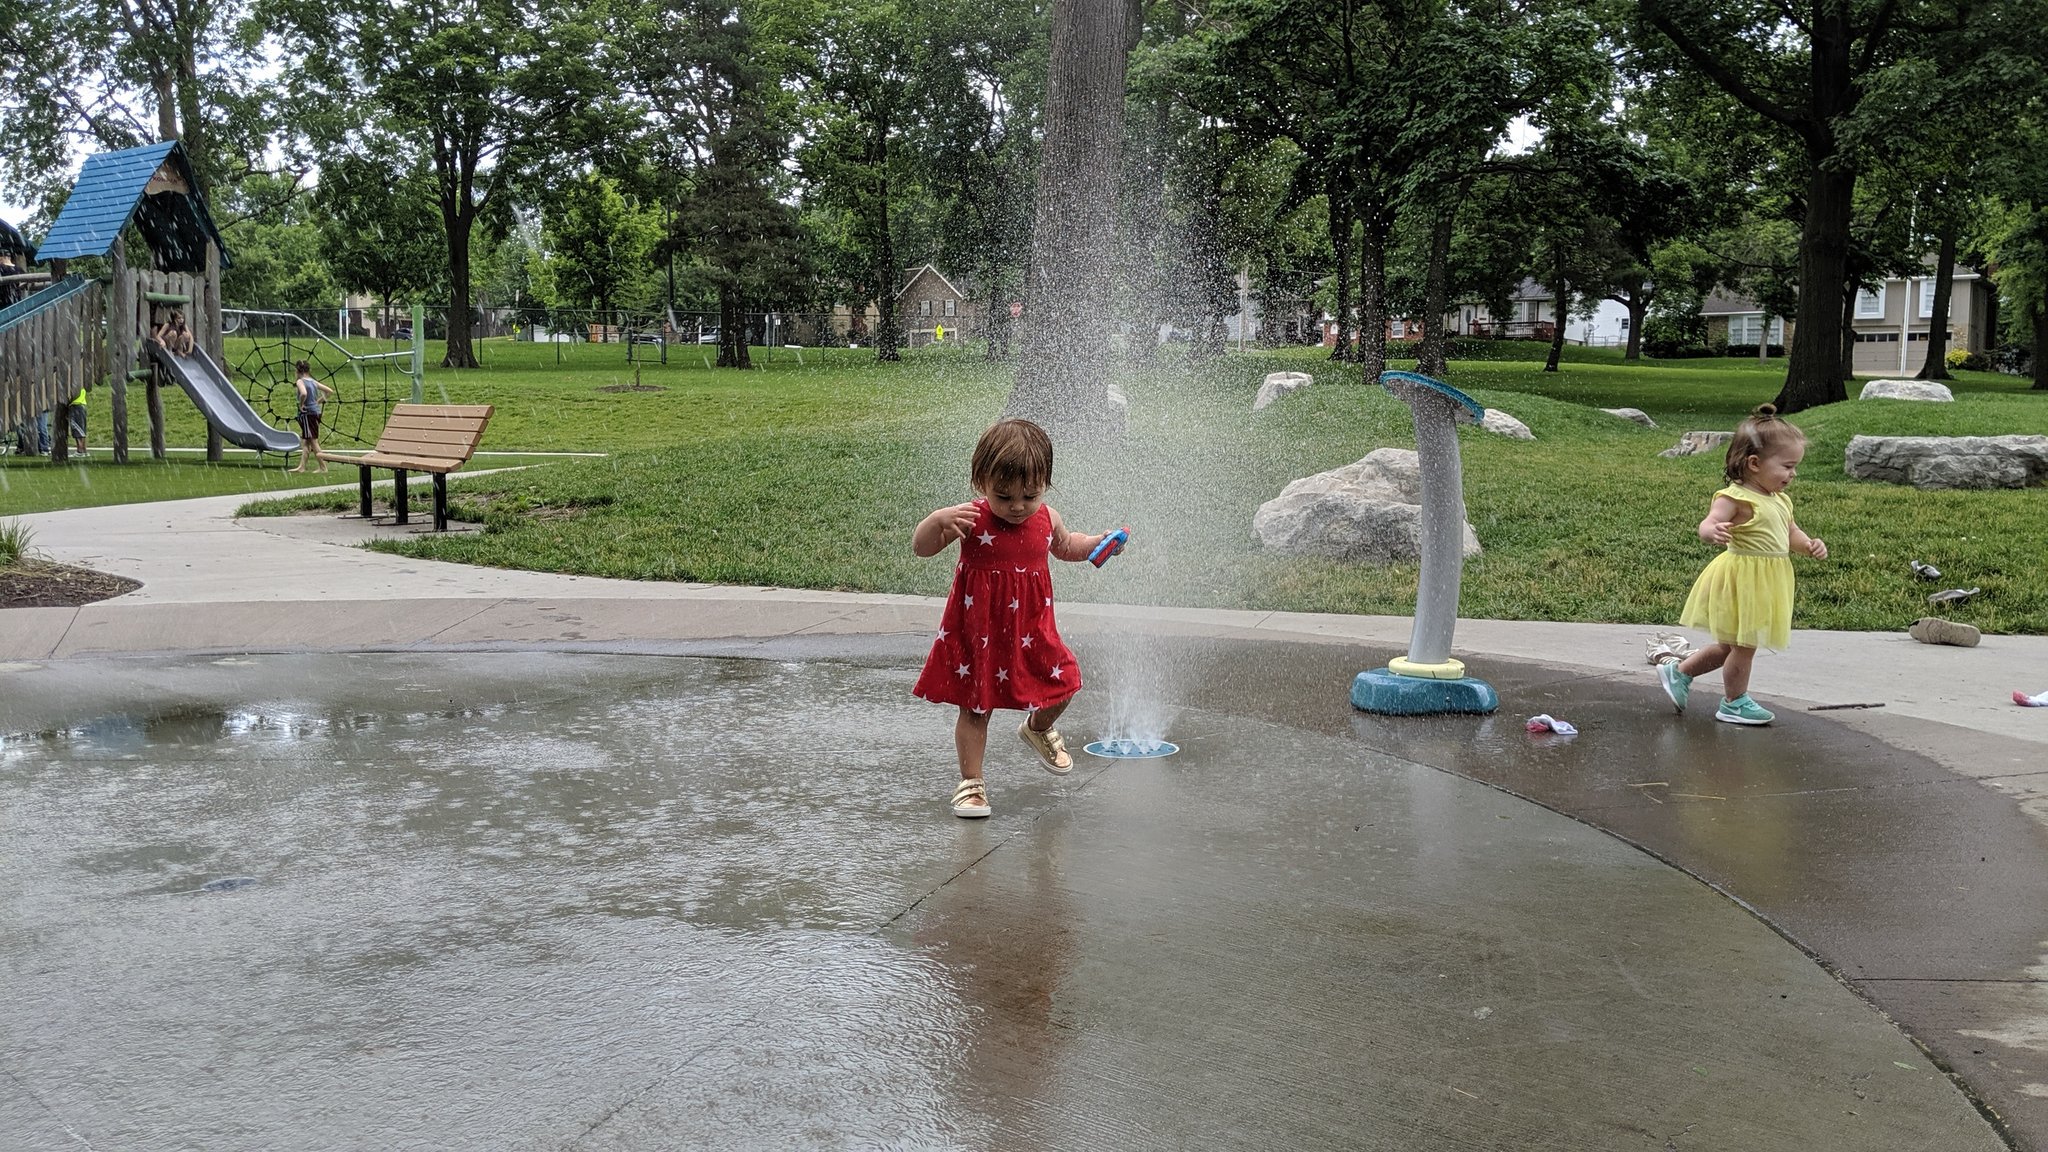 Splash Pads - City of Overland Park, Kansas